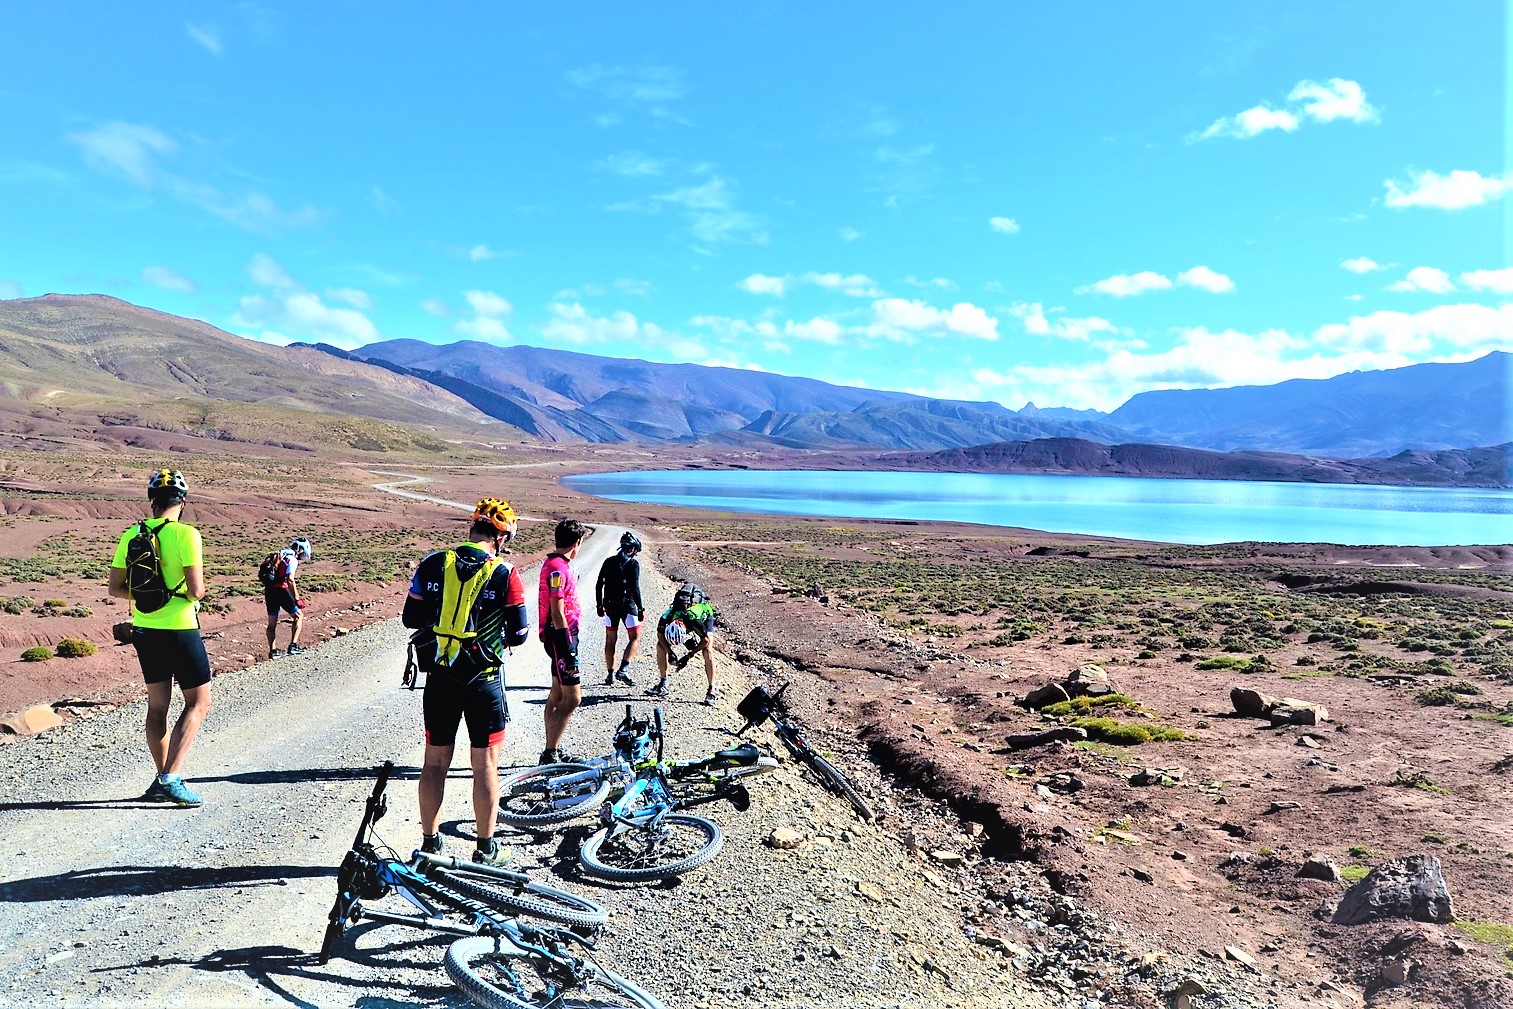 Viaje a Marruecos mountain bike a marruecos